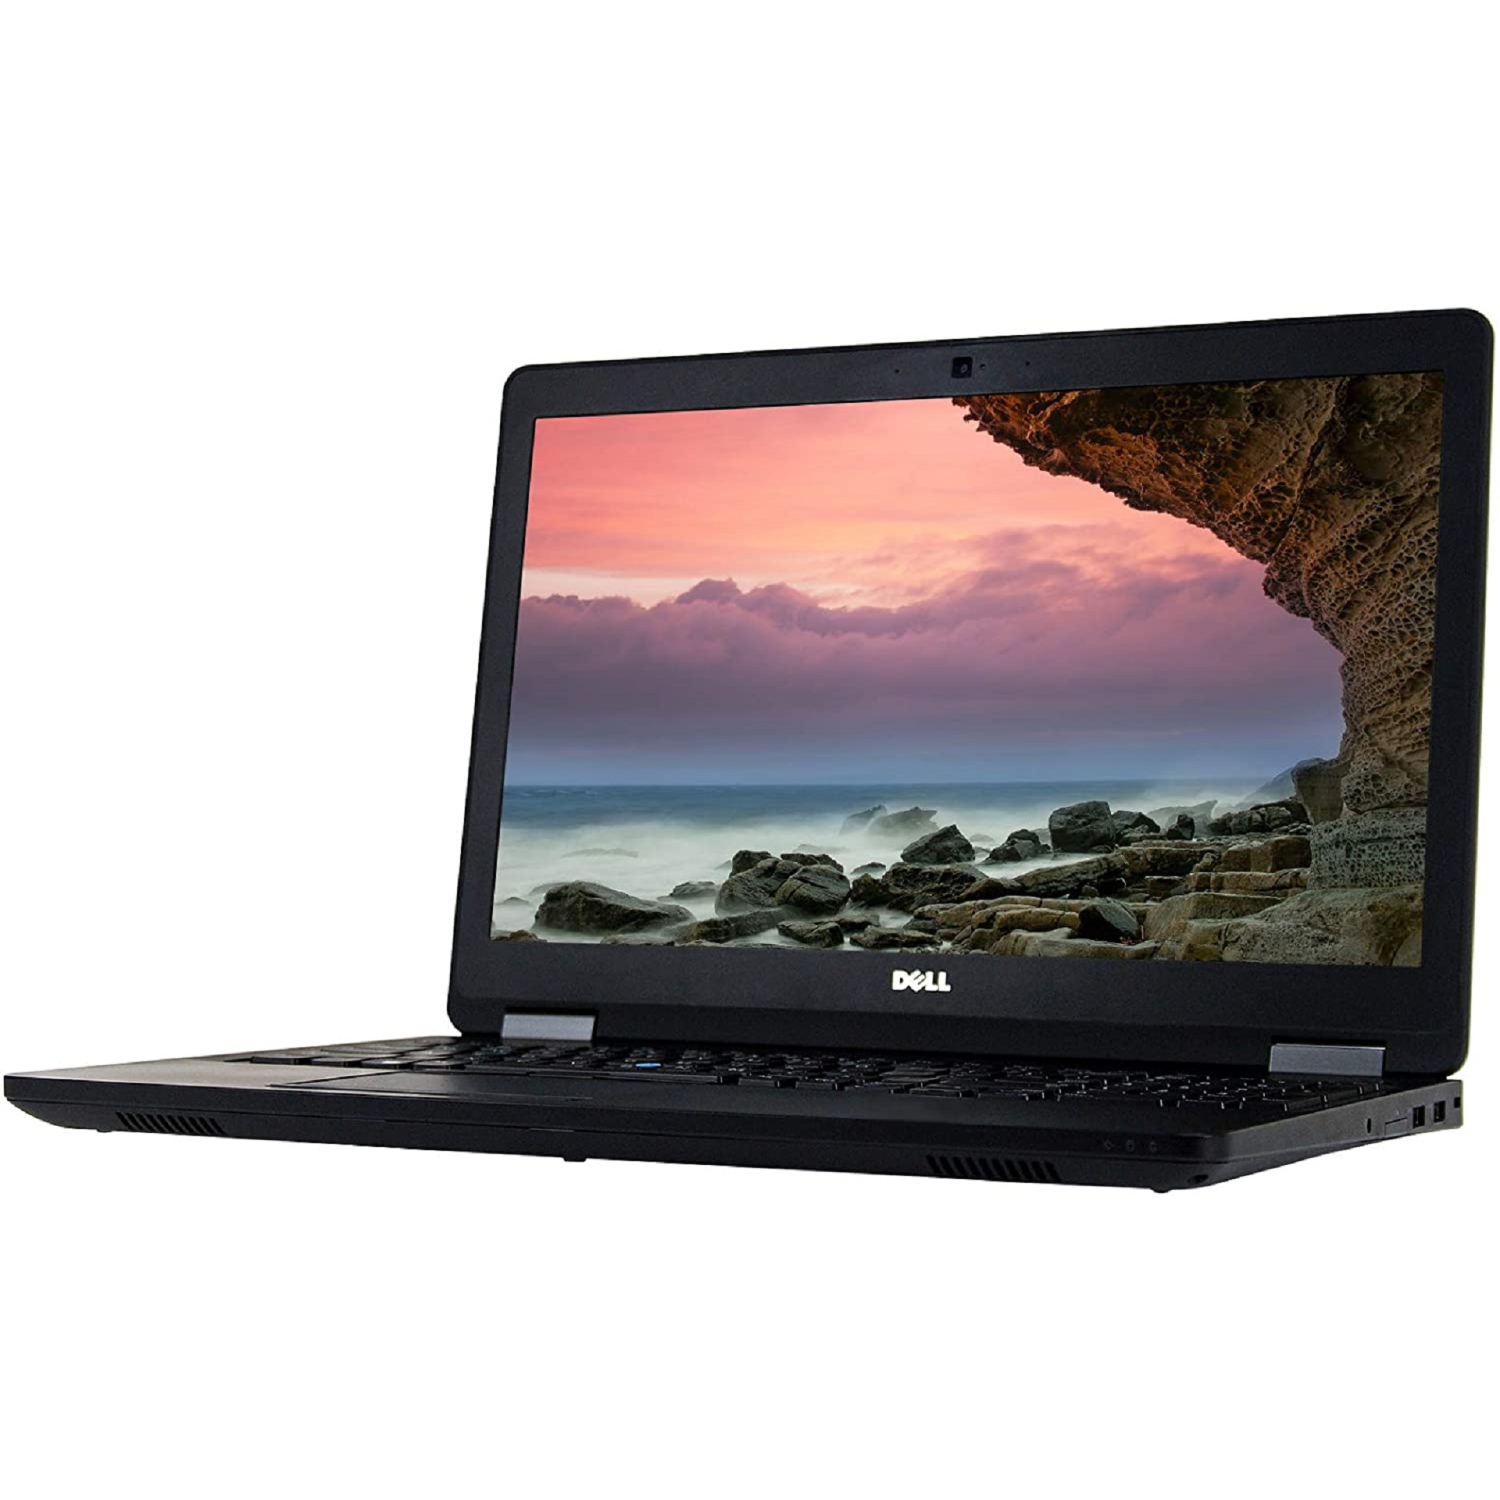 Refurbished (Good) - Dell Latitude E5570 15.6 Inch Laptop, Intel Core i5 6300U 2.4ghz, 8GB RAM, 256GB SSD, Backlit Keyboard, Webcam, Win 10 Pro